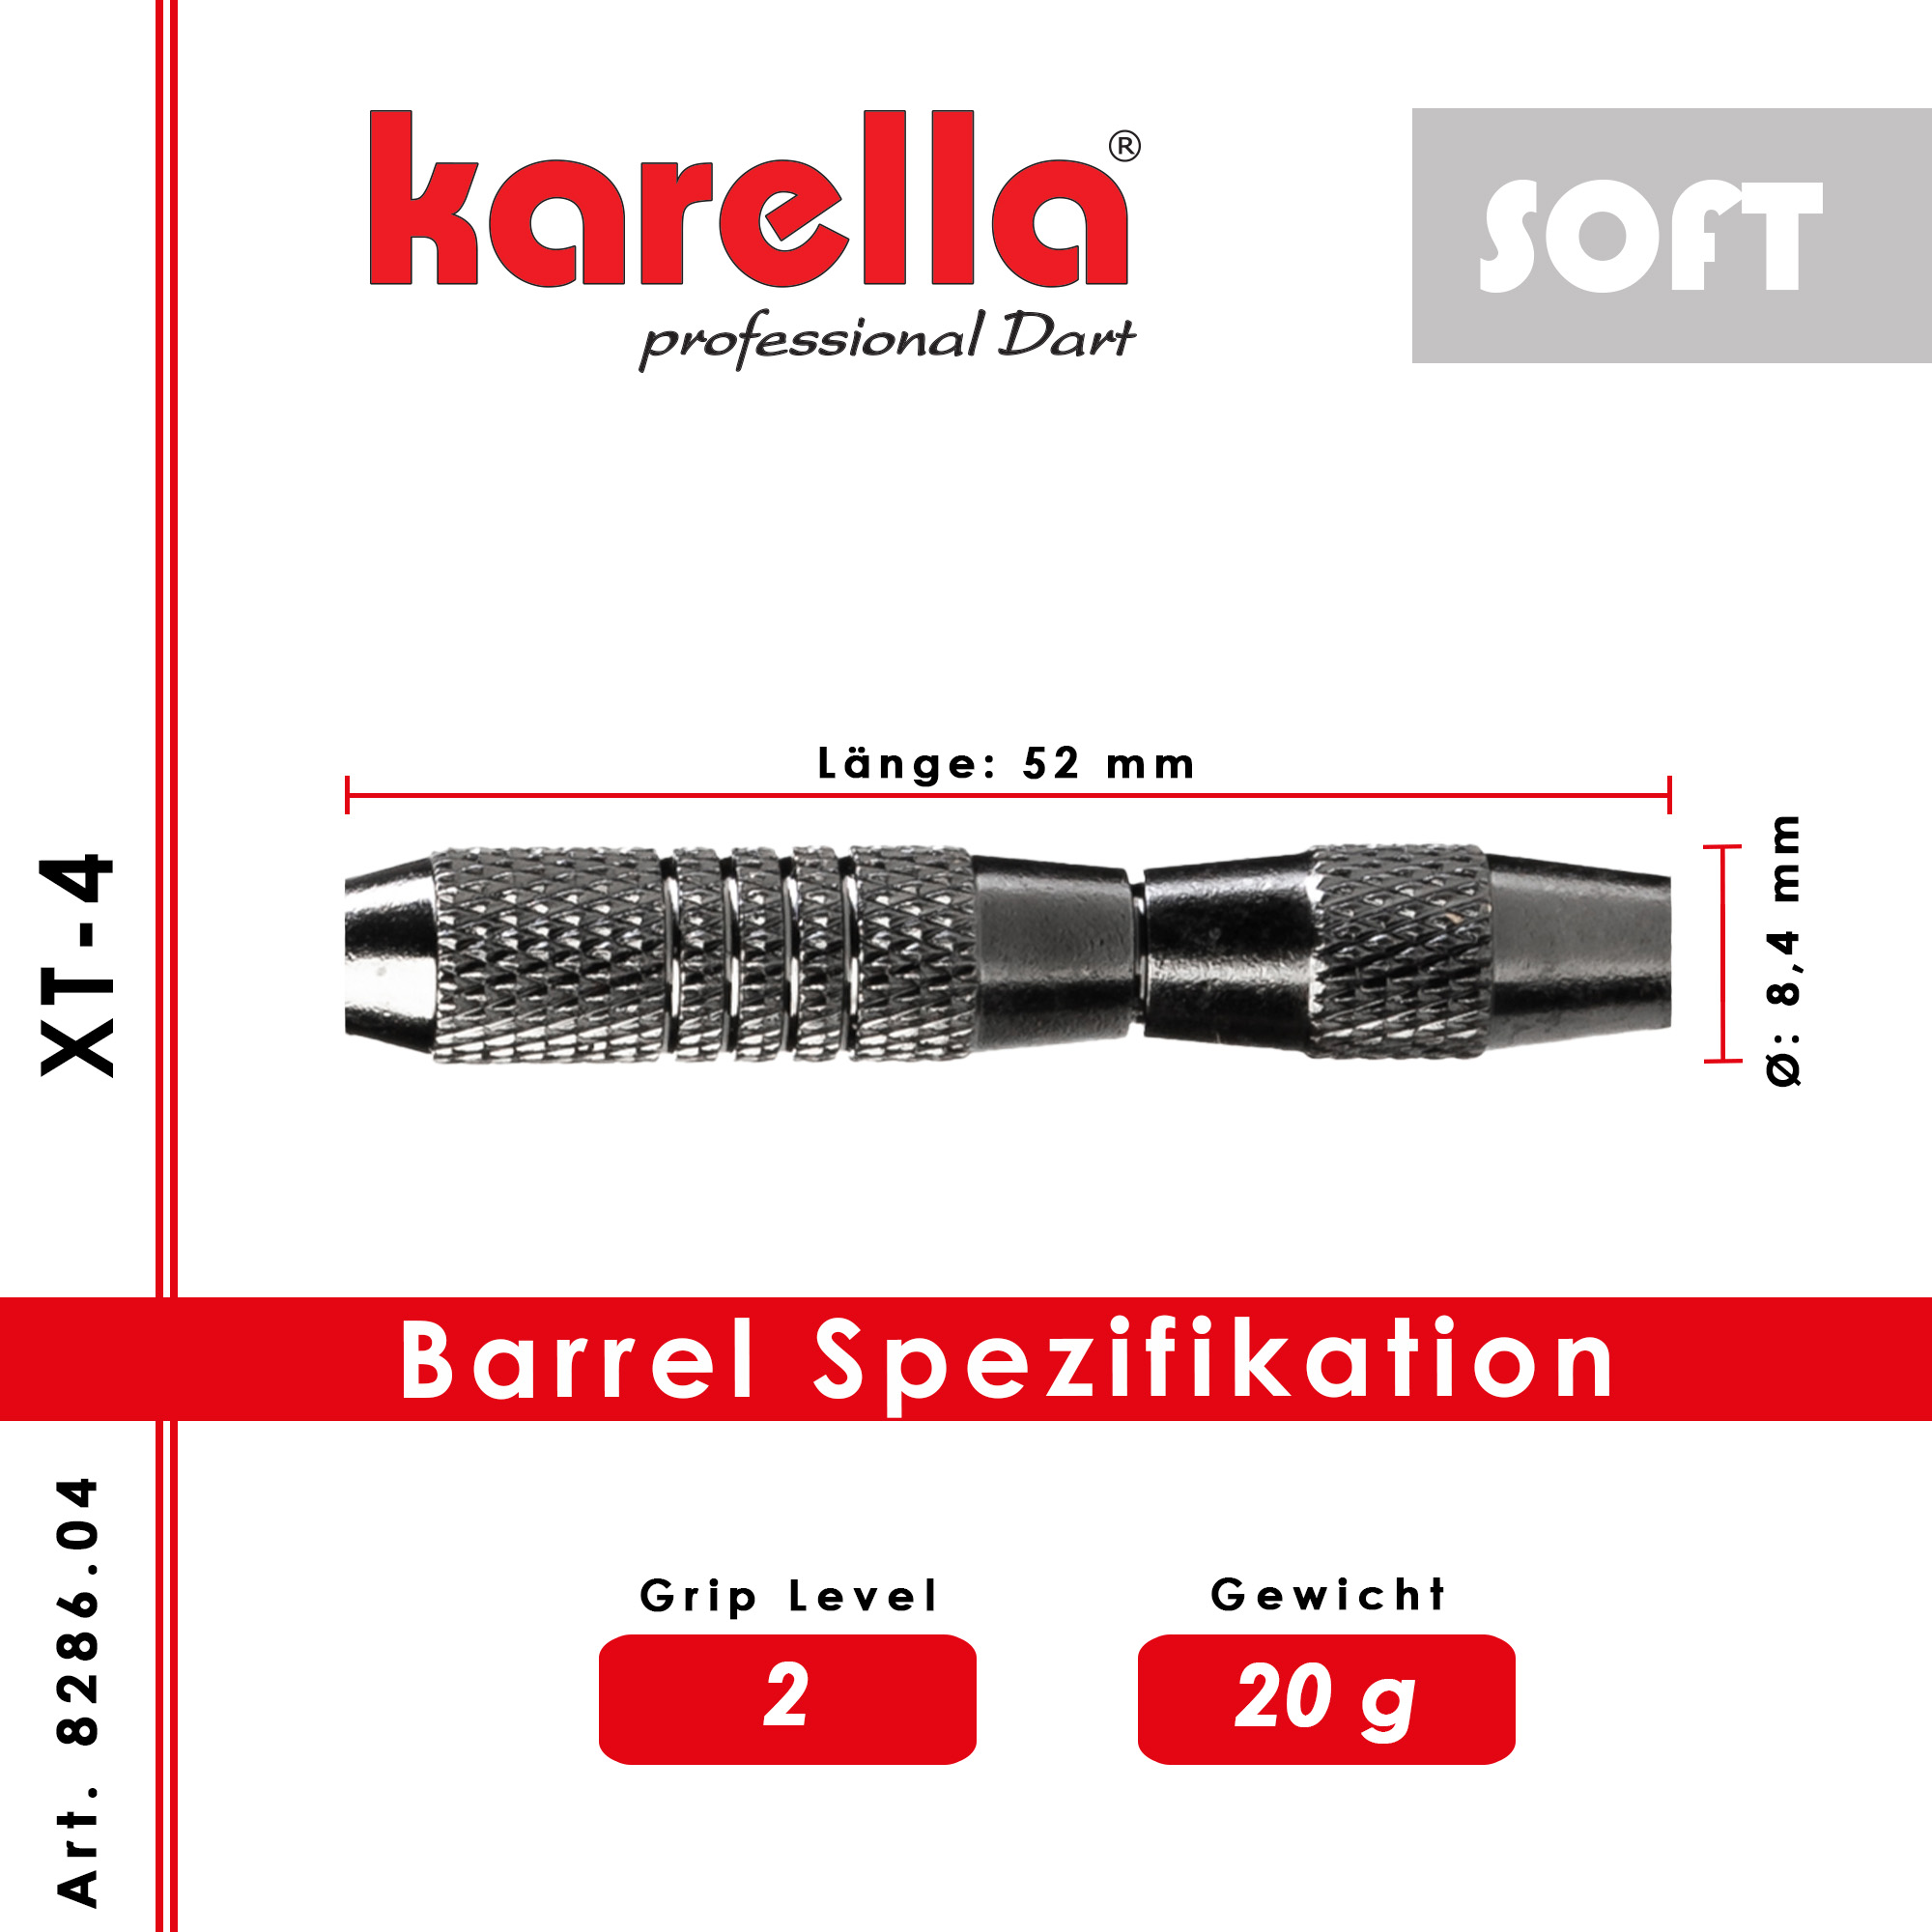 Softdart Karella XT-4 20g